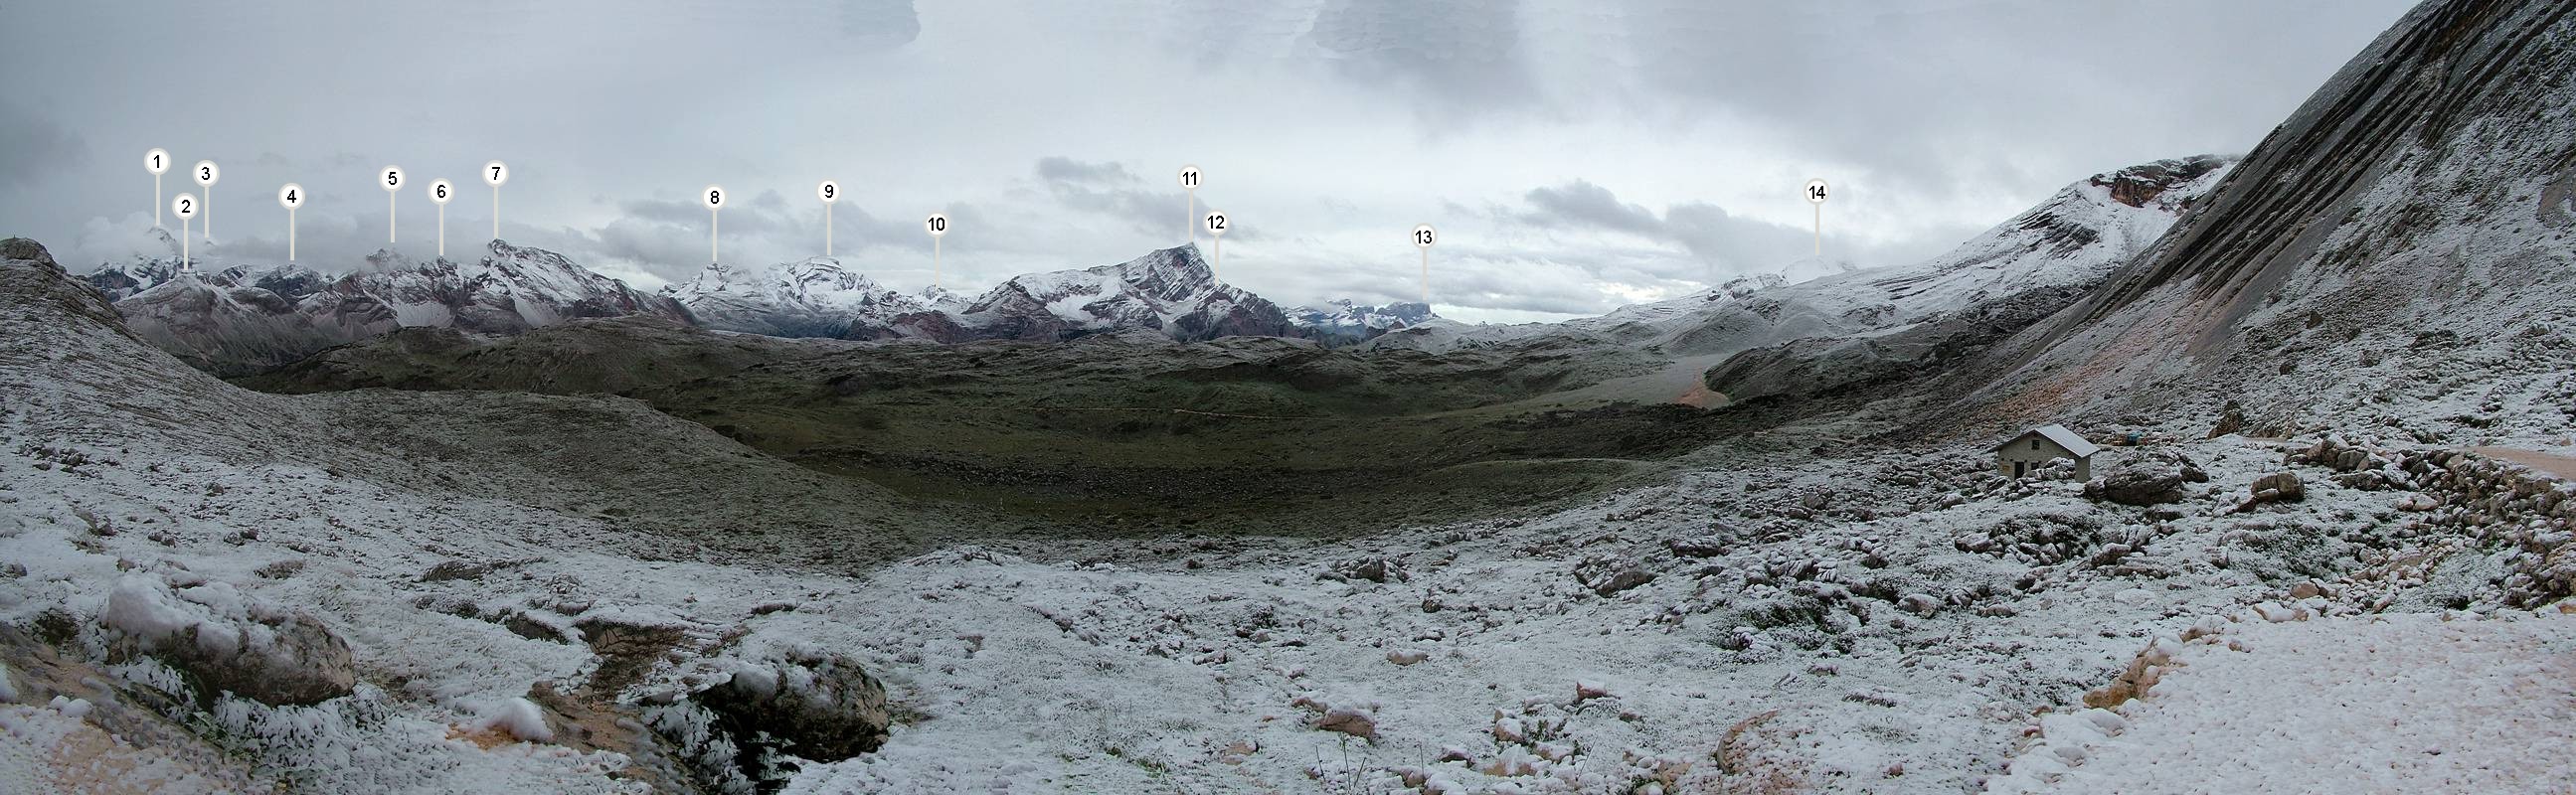 Ein wenig seltsam sieht das schon aus, mitten im Sommer soviel Schnee auf den Bergen rund um uns herum. Folgende Berge sind zu sehen: (1) Tofana di Dentro [Tofana de Inze, 3288m], (2) C. Lavinores [2462m], (3) Tofana de Rozes [3225m], (4) Croda de Antruiles [2405m], (5) M. Ciaval [2912m], (6) Camin [2610m],  (8) Sas dei Bec [2562m], (9) Piz d. Lavarela [3055m], (10) Piz Boe [3152m], (11) Neuner [Sasso delle Nove, Sas dales nu, 2968m], (12) M. Loeres [2527m], (13) Peitlerkofel [Putia, Sas de Putia, 2875m] und der (14) Munte Jela de Senes [2787m].